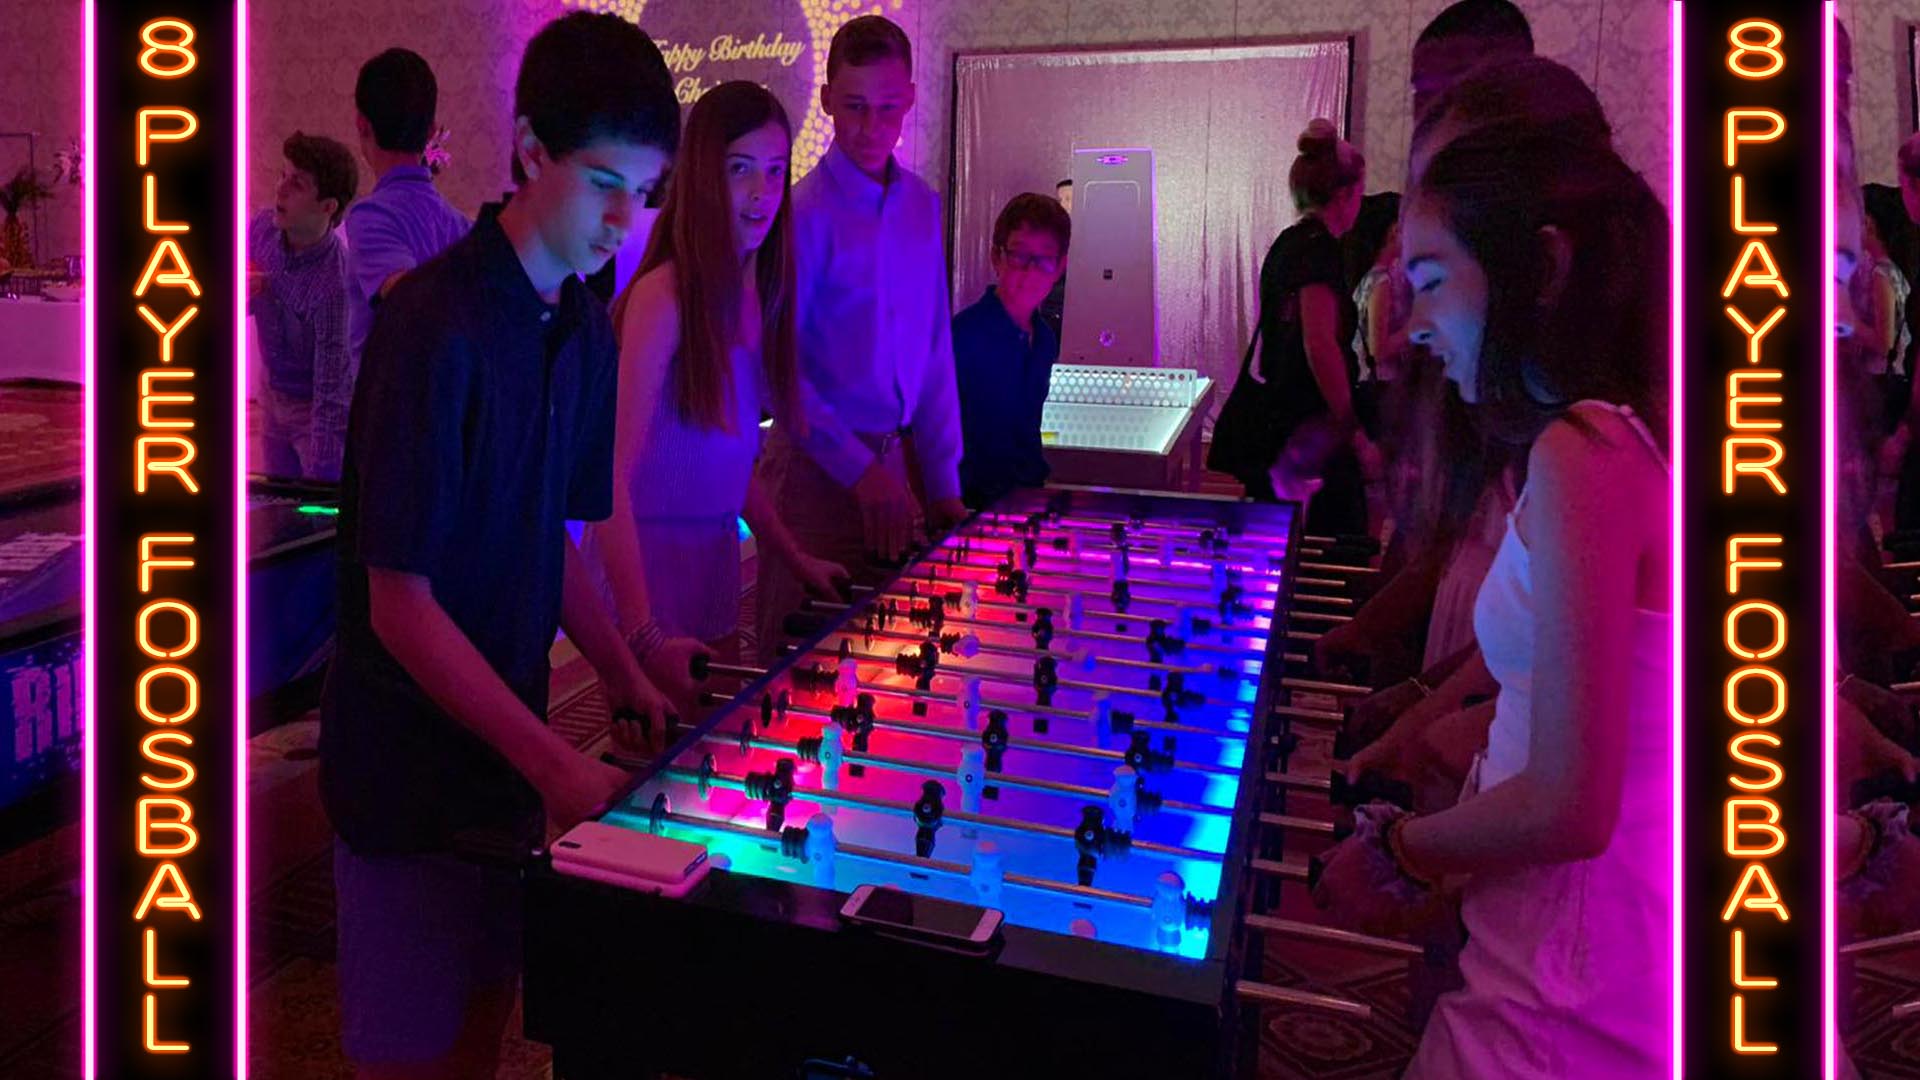 8-player LED foosball event rental game